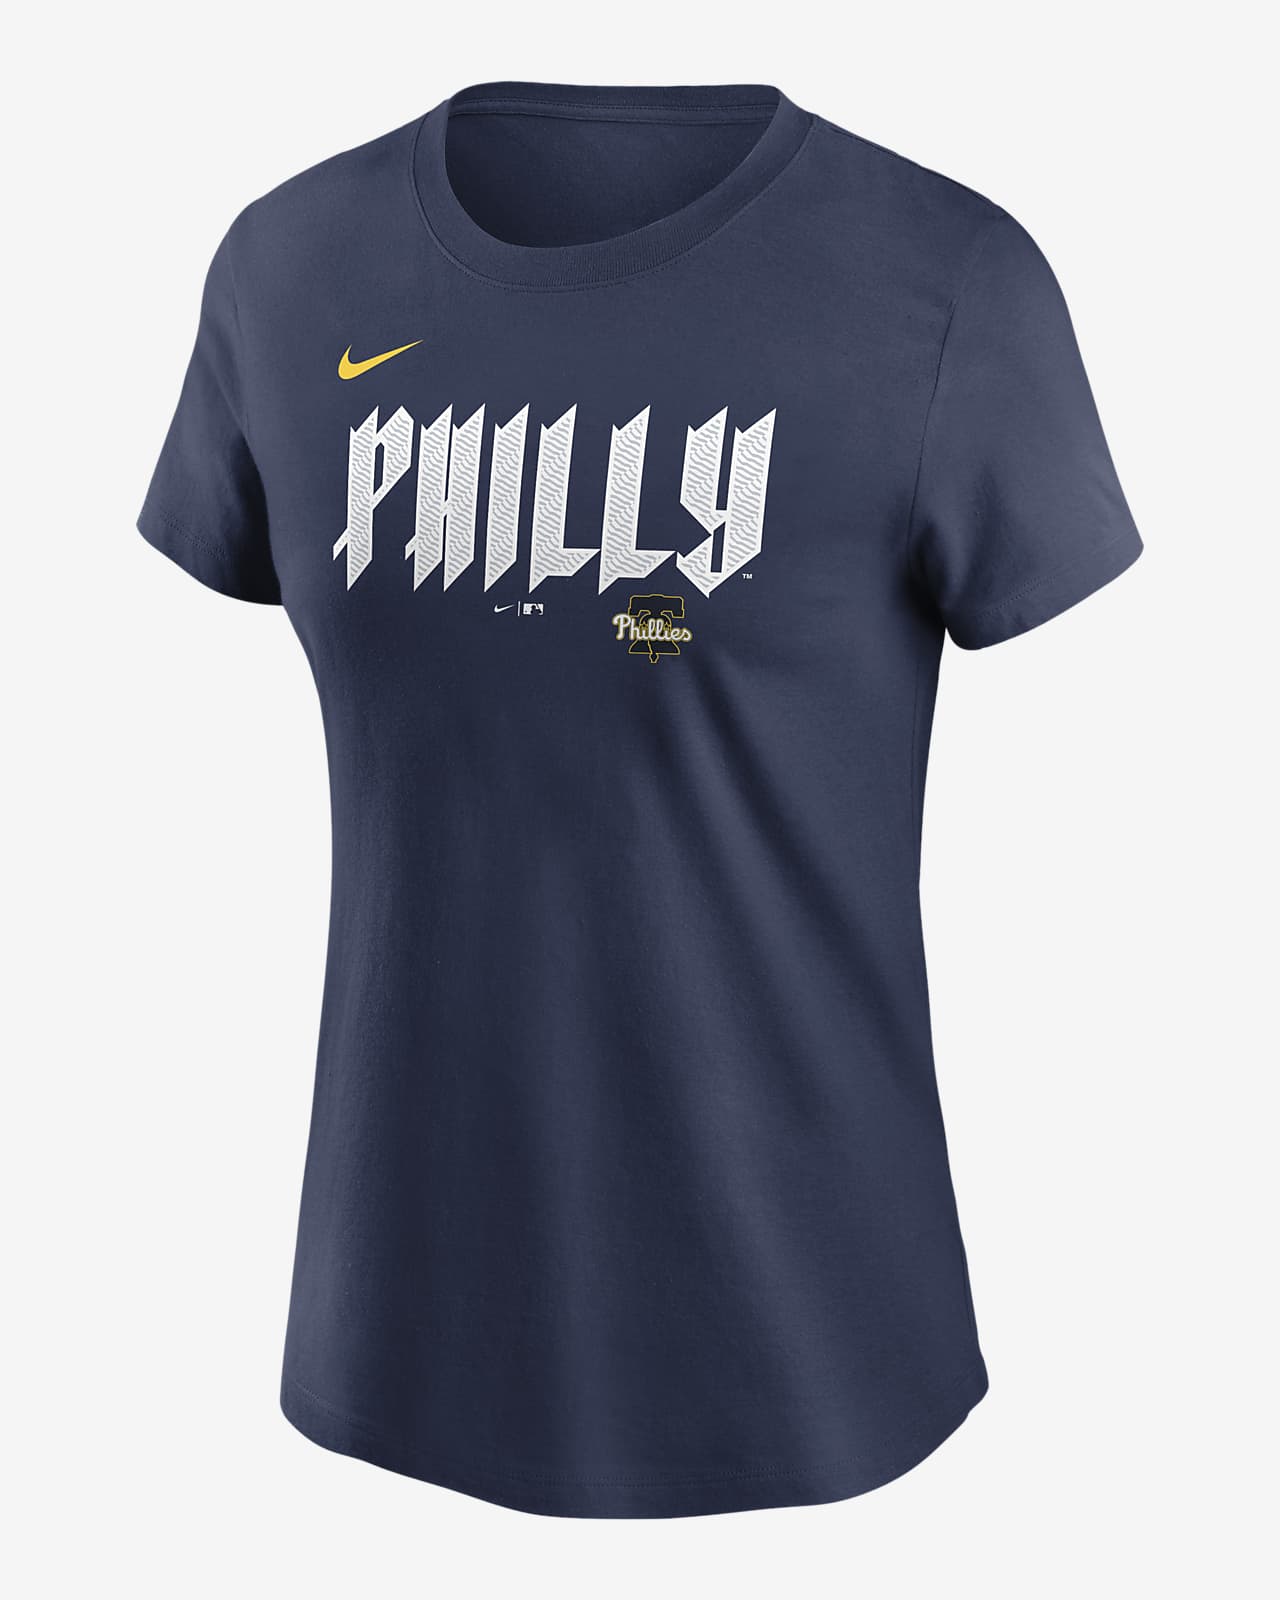 Aaron Nola Philadelphia Phillies City Connect Fuse Women's Nike MLB T-Shirt